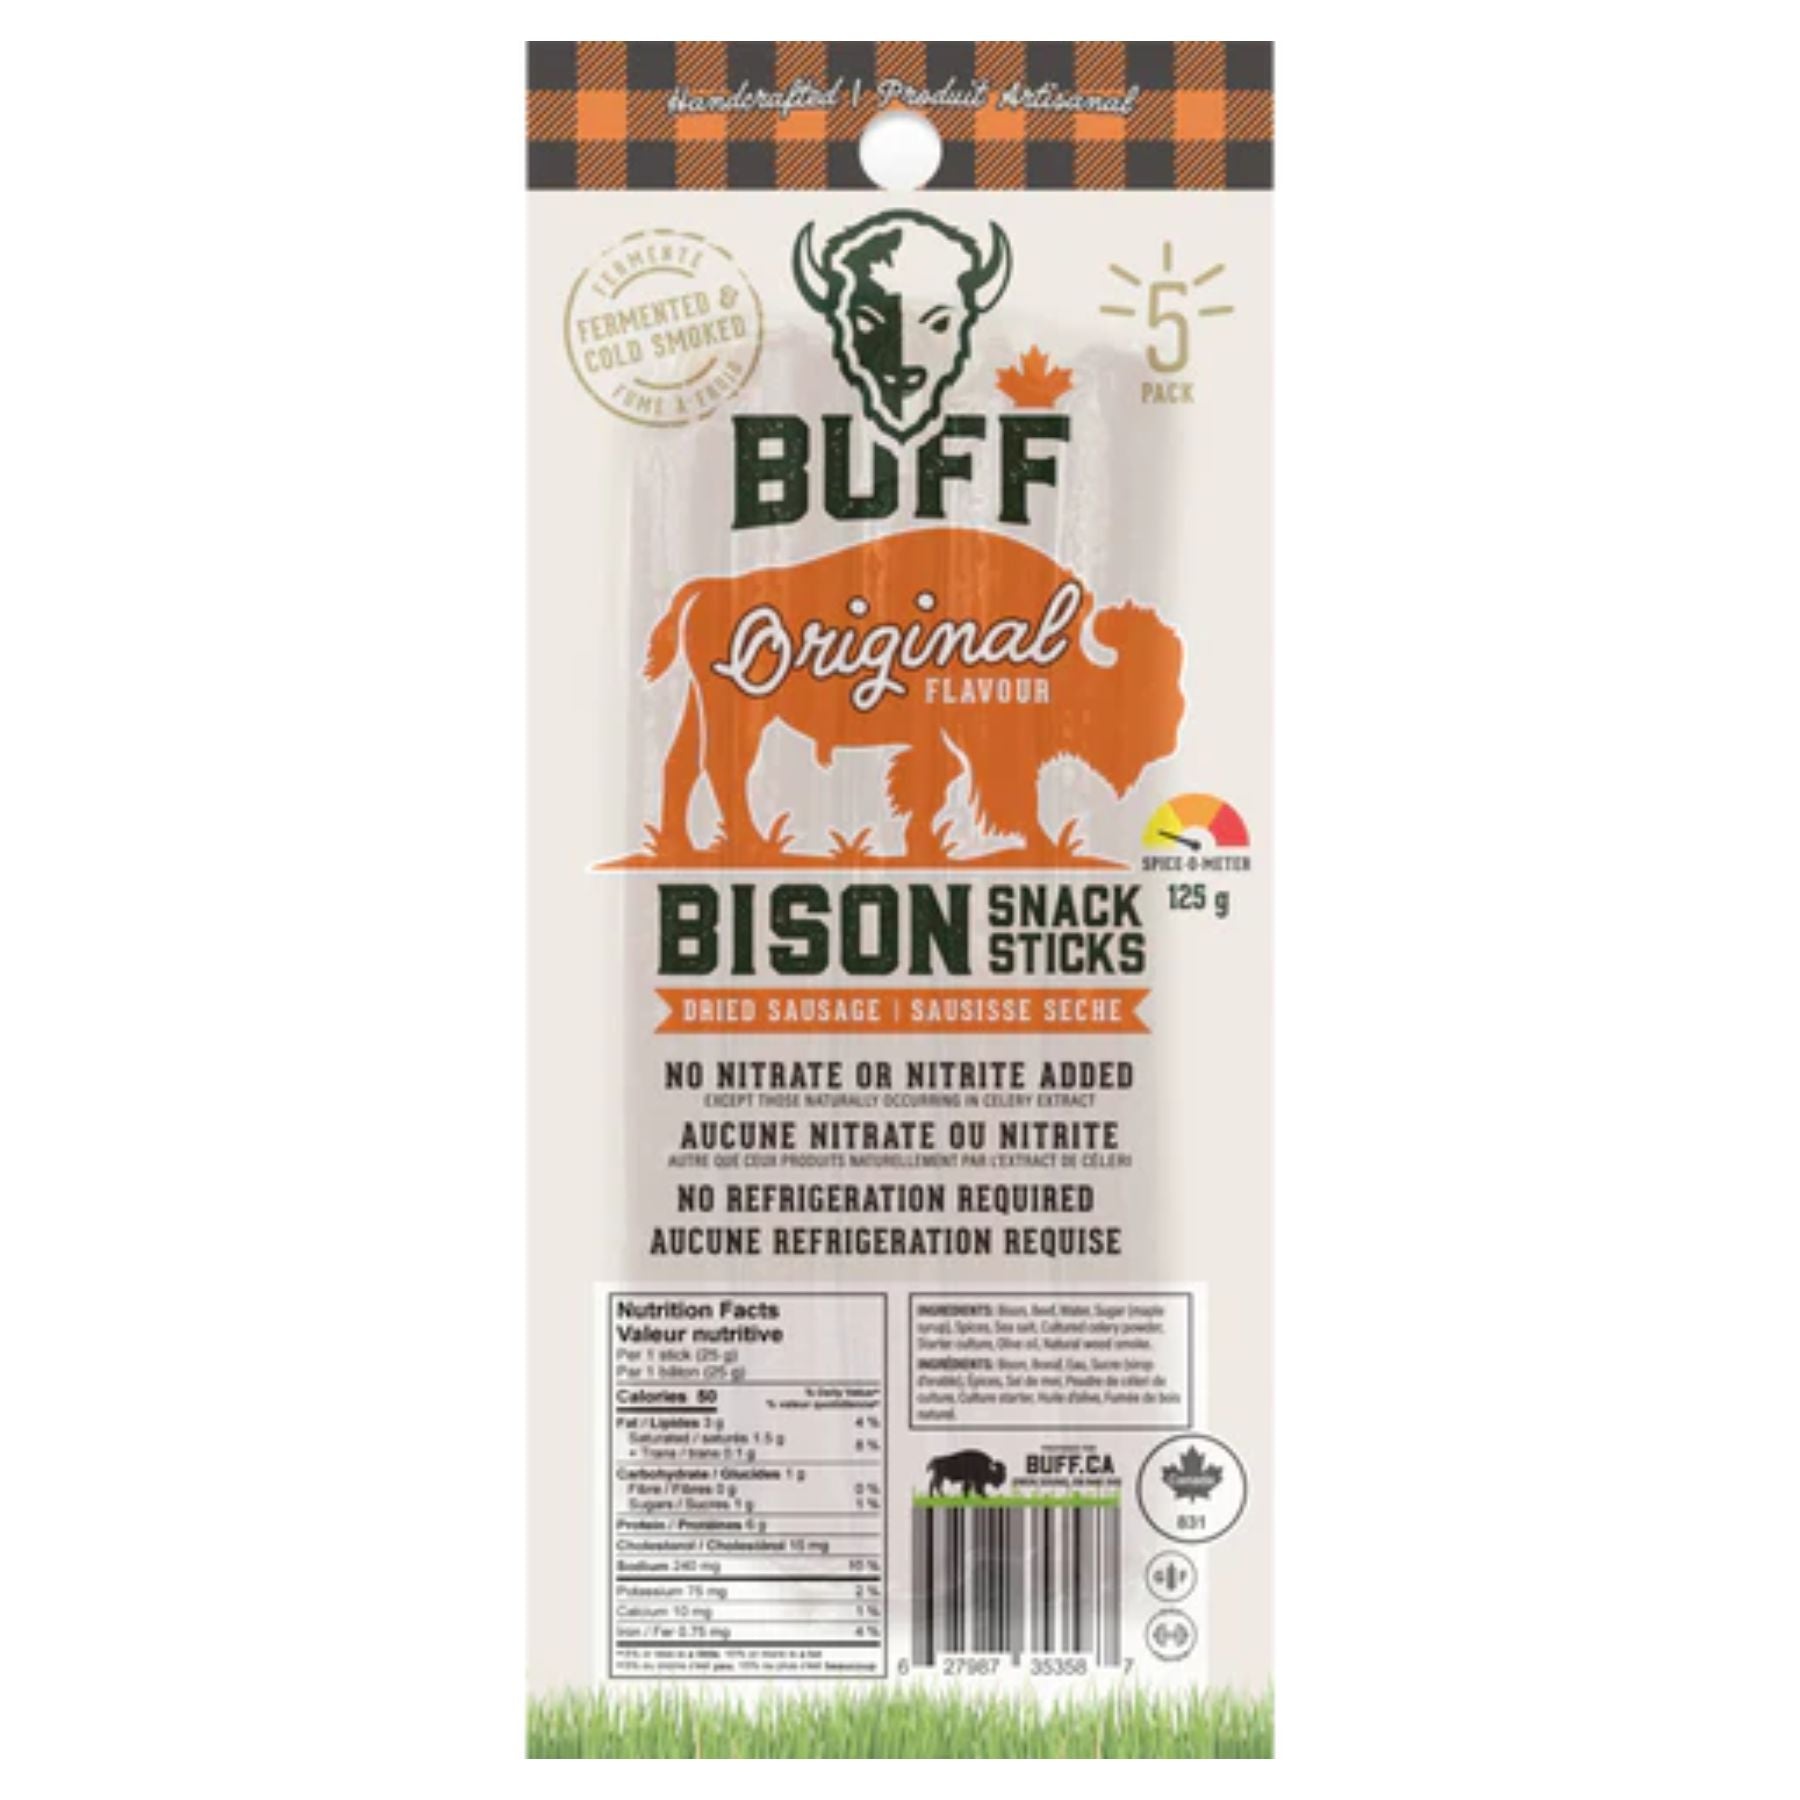 BUFF Bison Snack Stick - Original 5 Pack (120g)